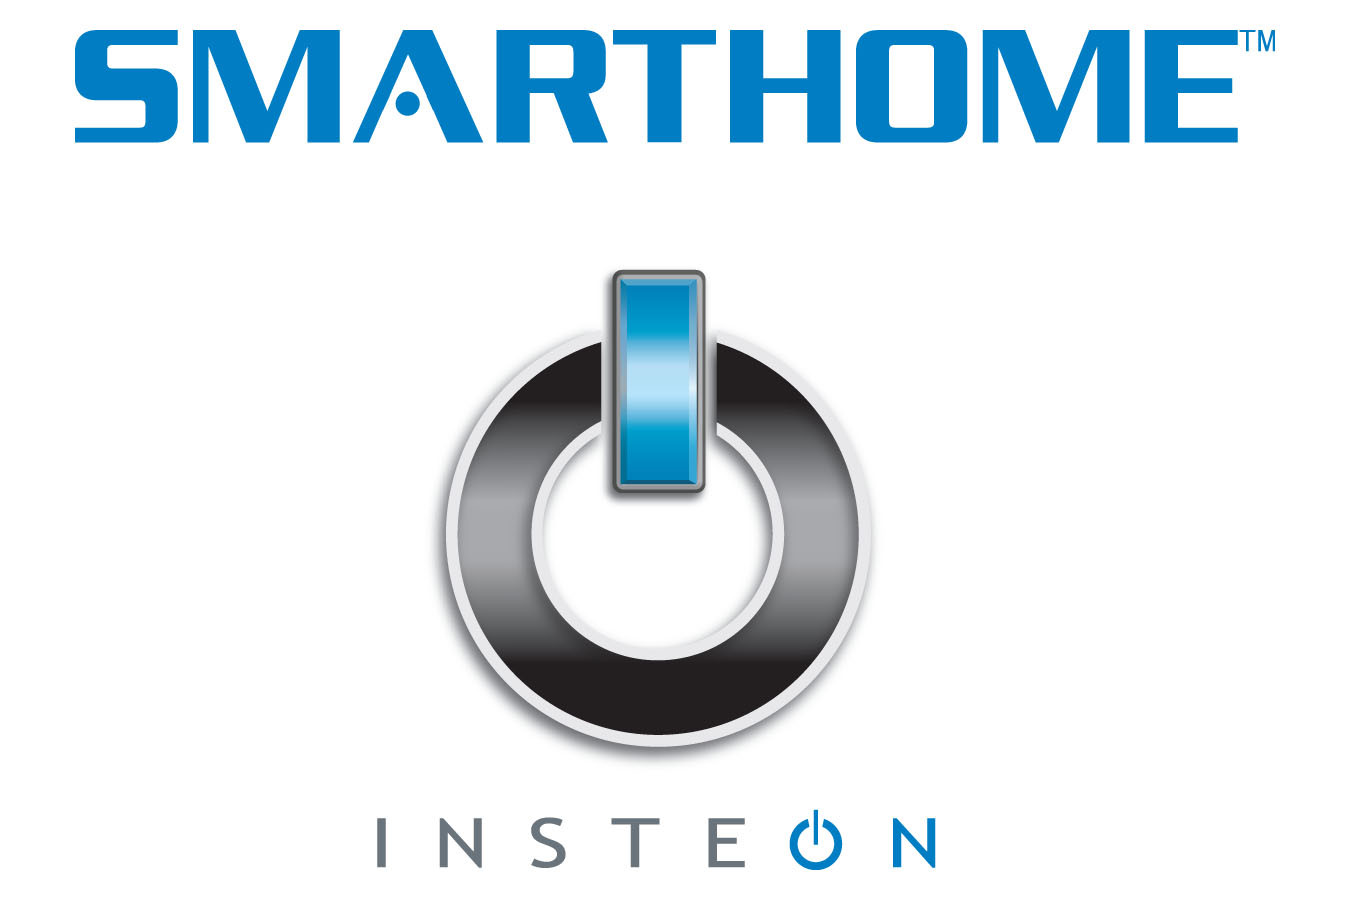 smarthome-insteon_logo.jpg